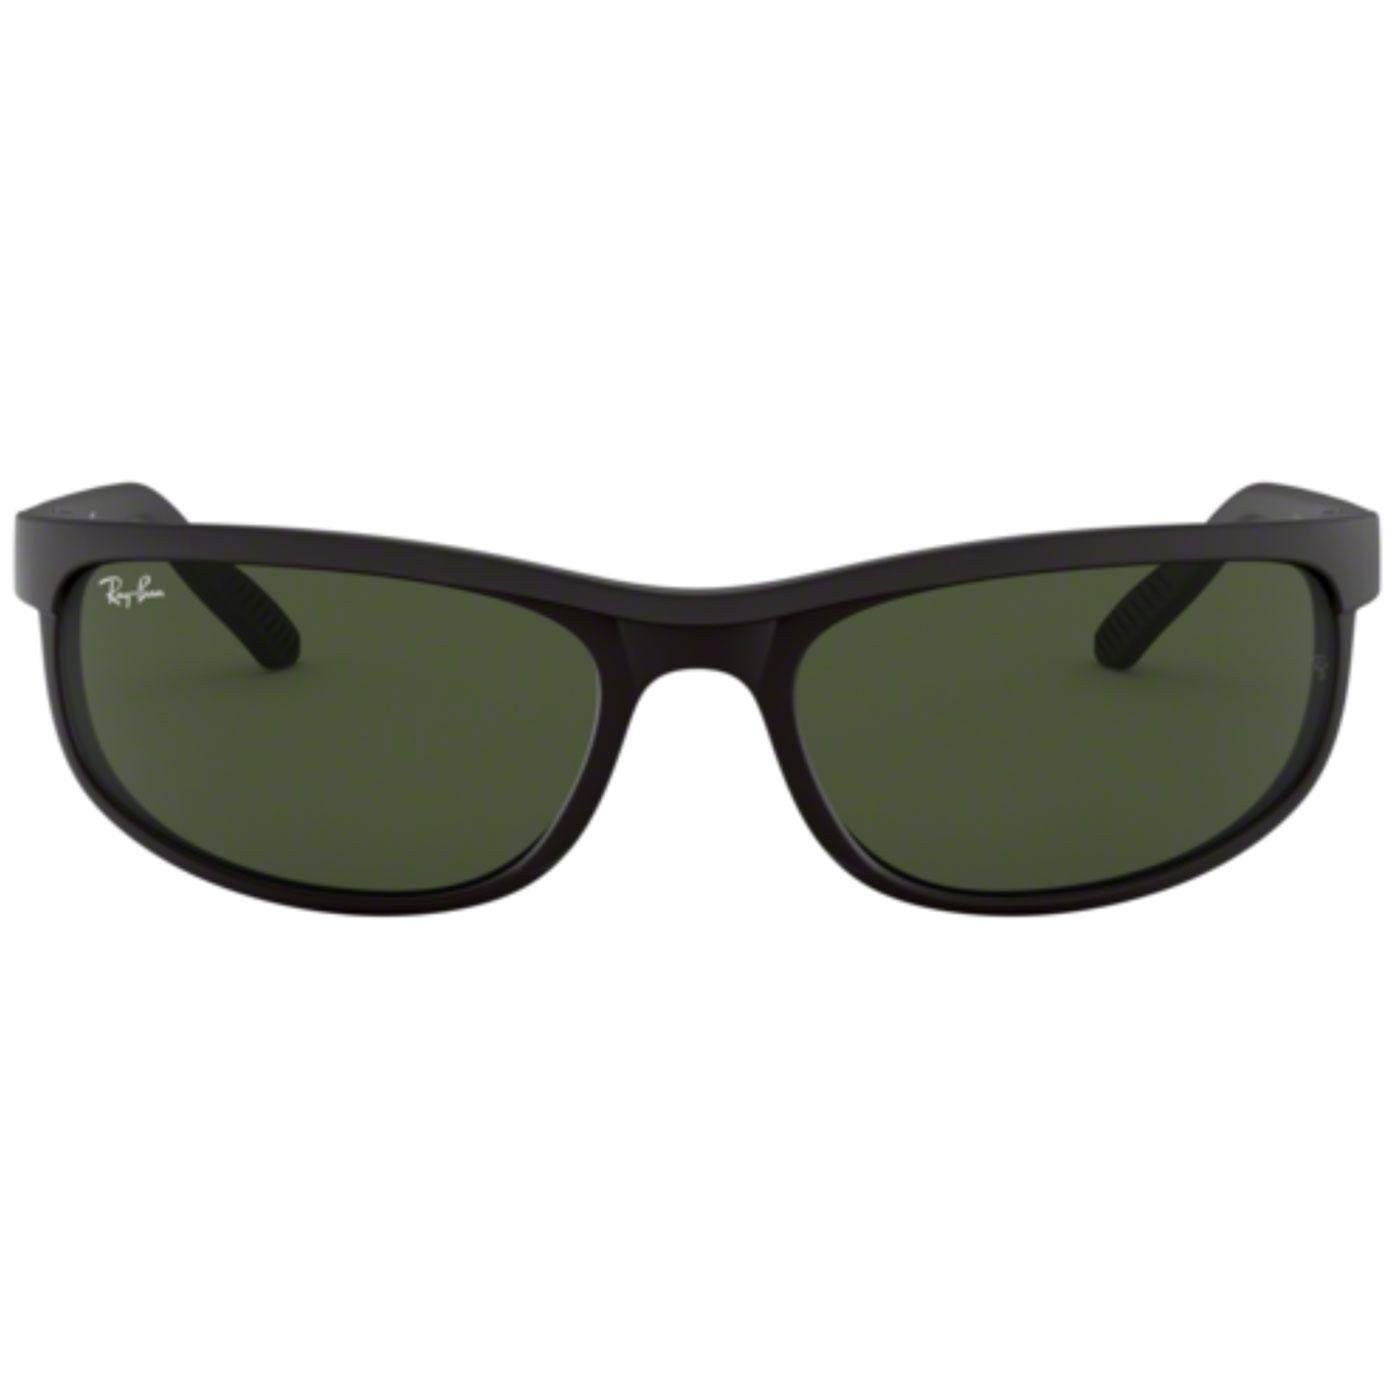 Ray-Ban Predator Retro G-15 Green Lens Wrap Round Sunglasses